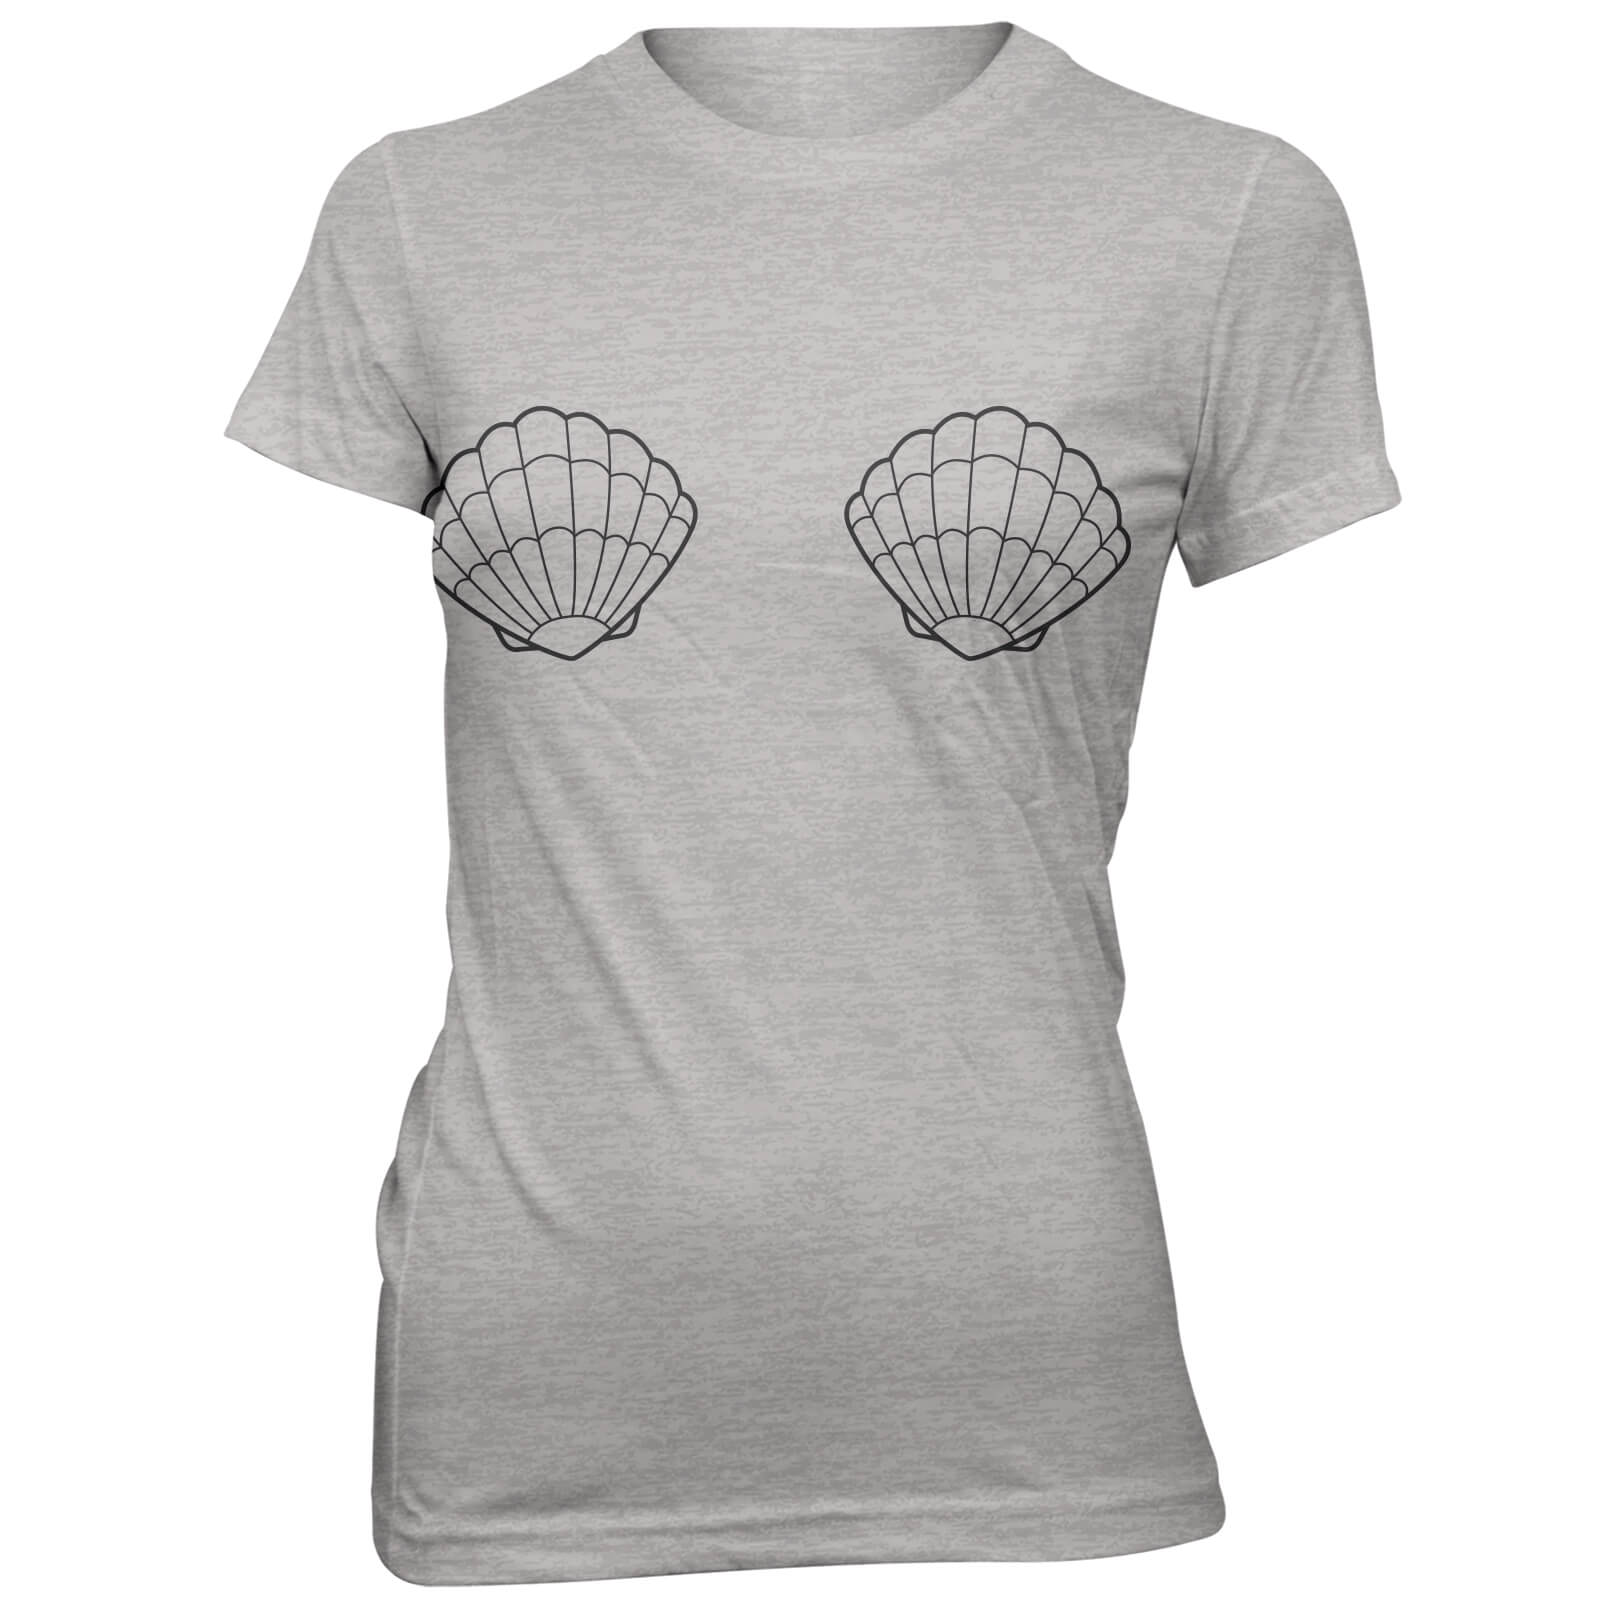 Small Shells Women's Grey T-Shirt - XXL - Grey